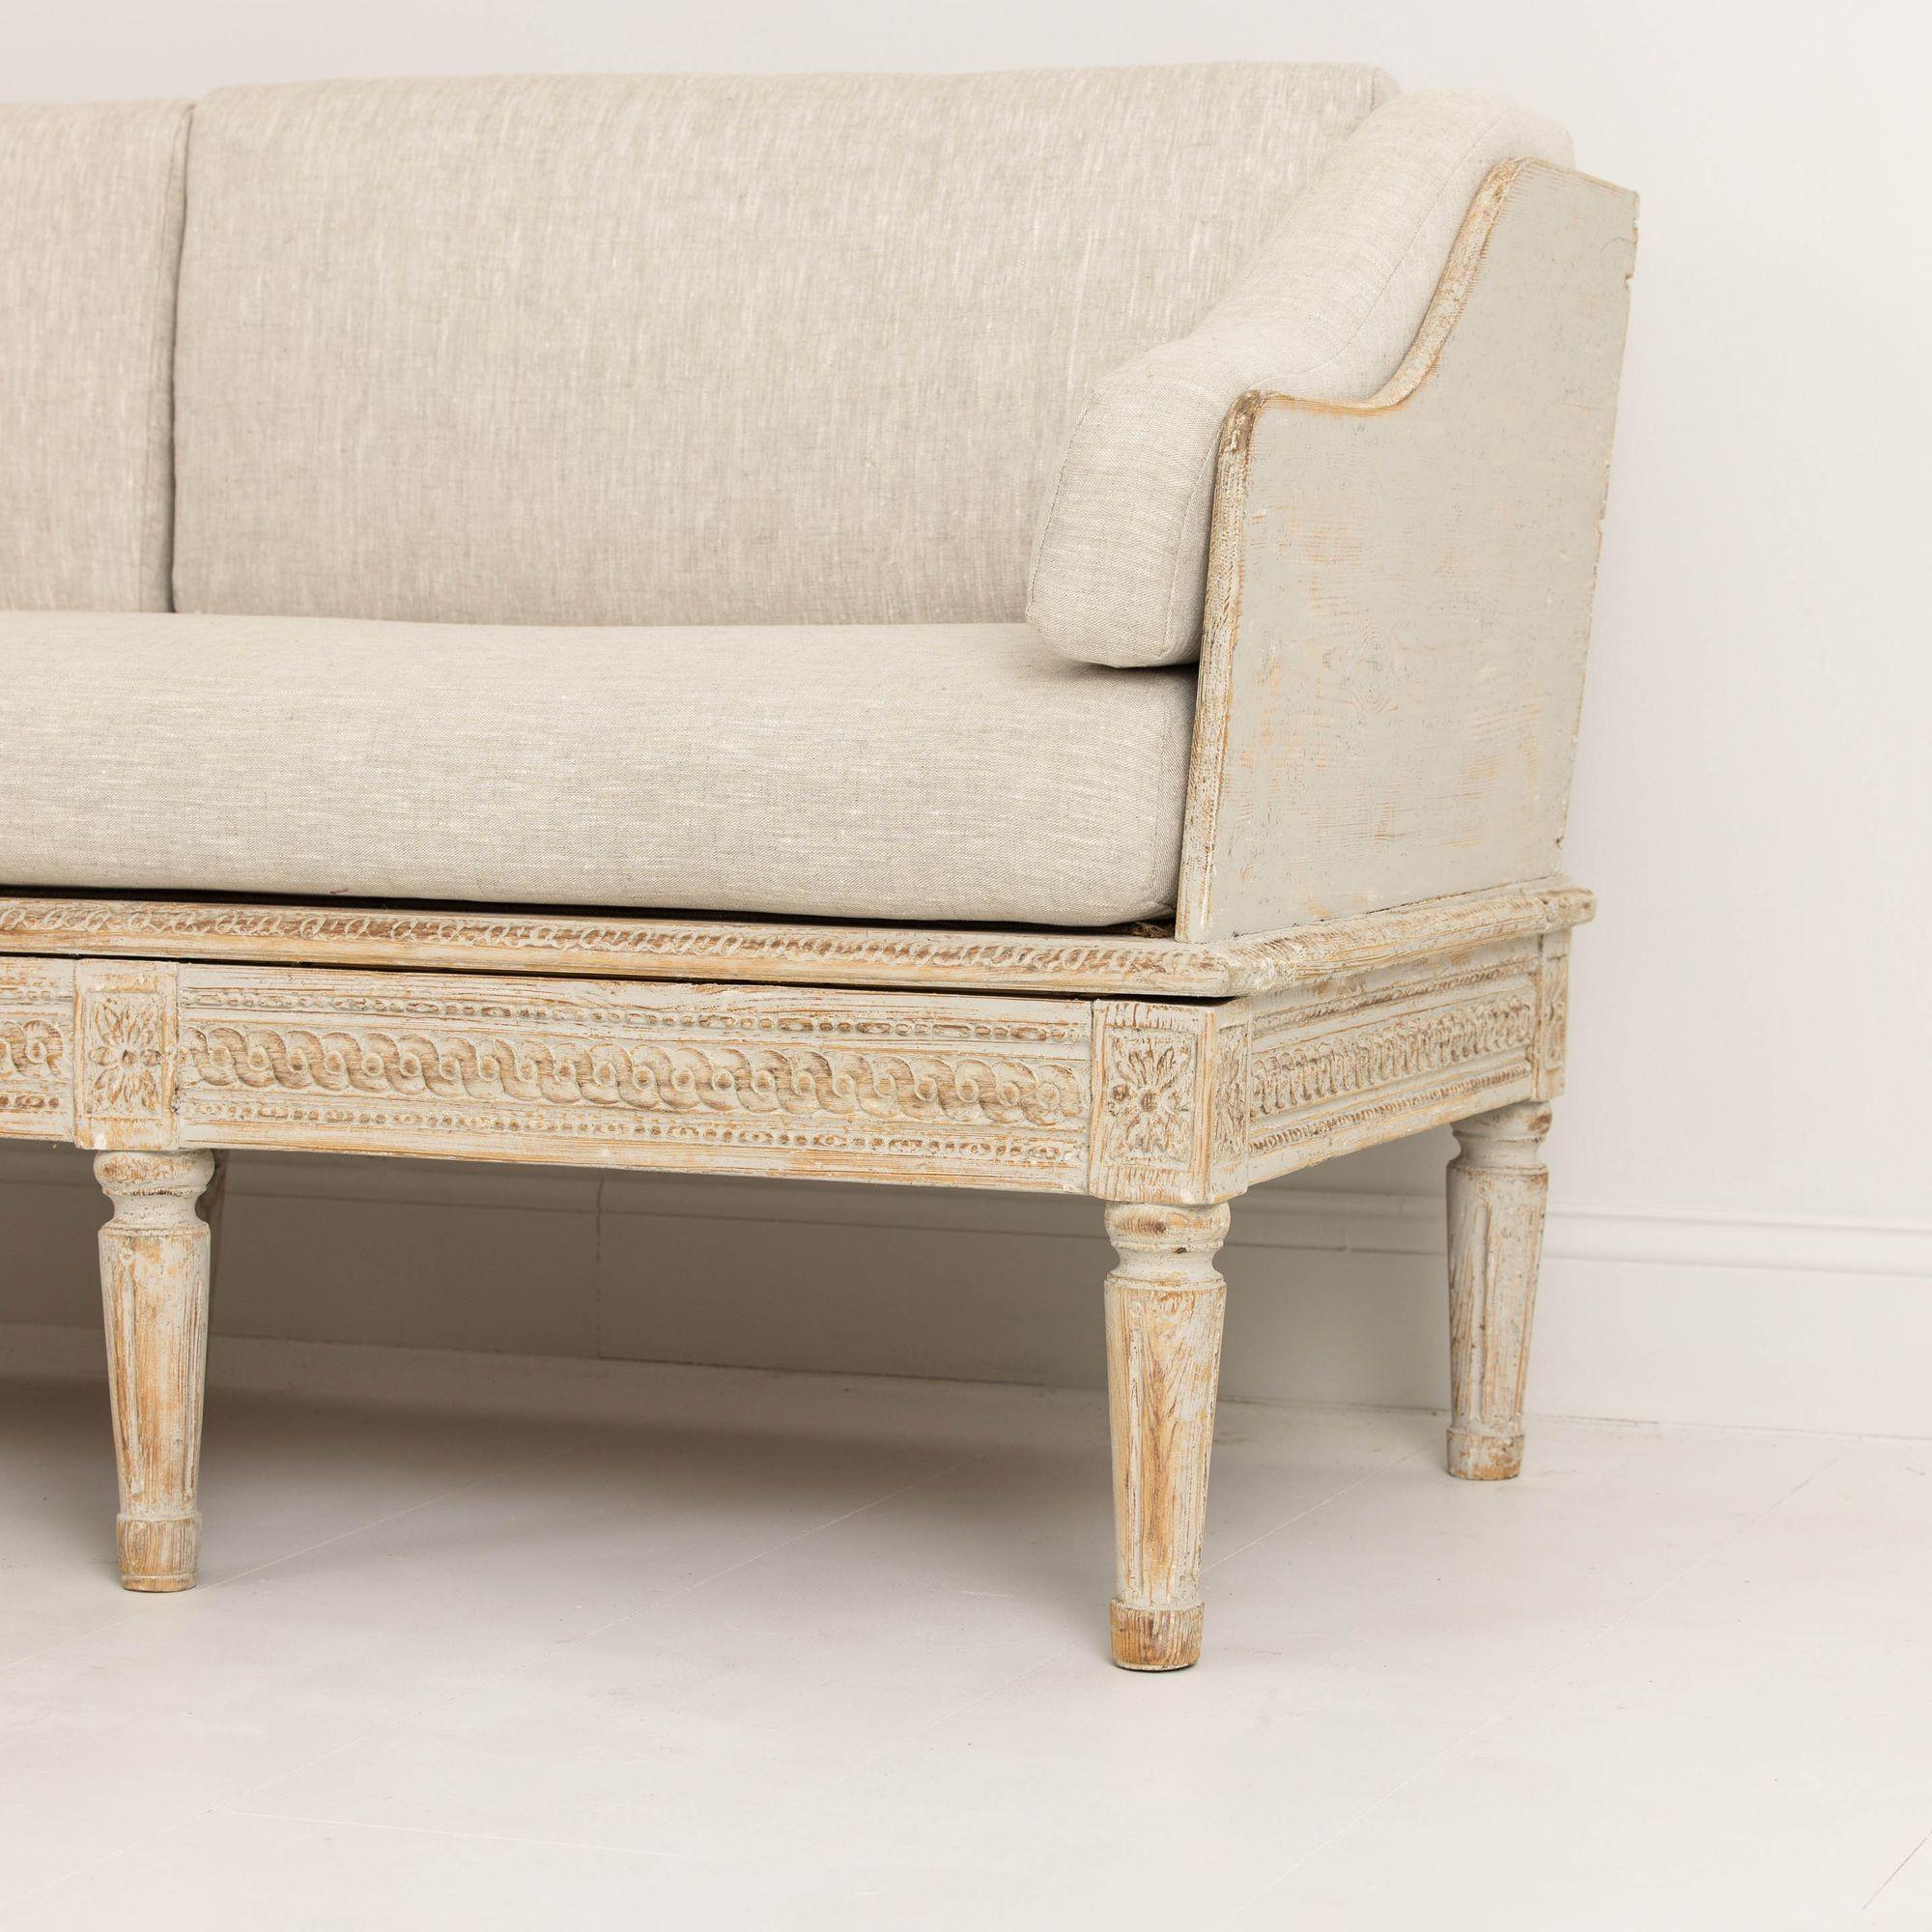 18th c. Swedish Gustavian Period Painted Sofa 'Trägsoffa' For Sale 1